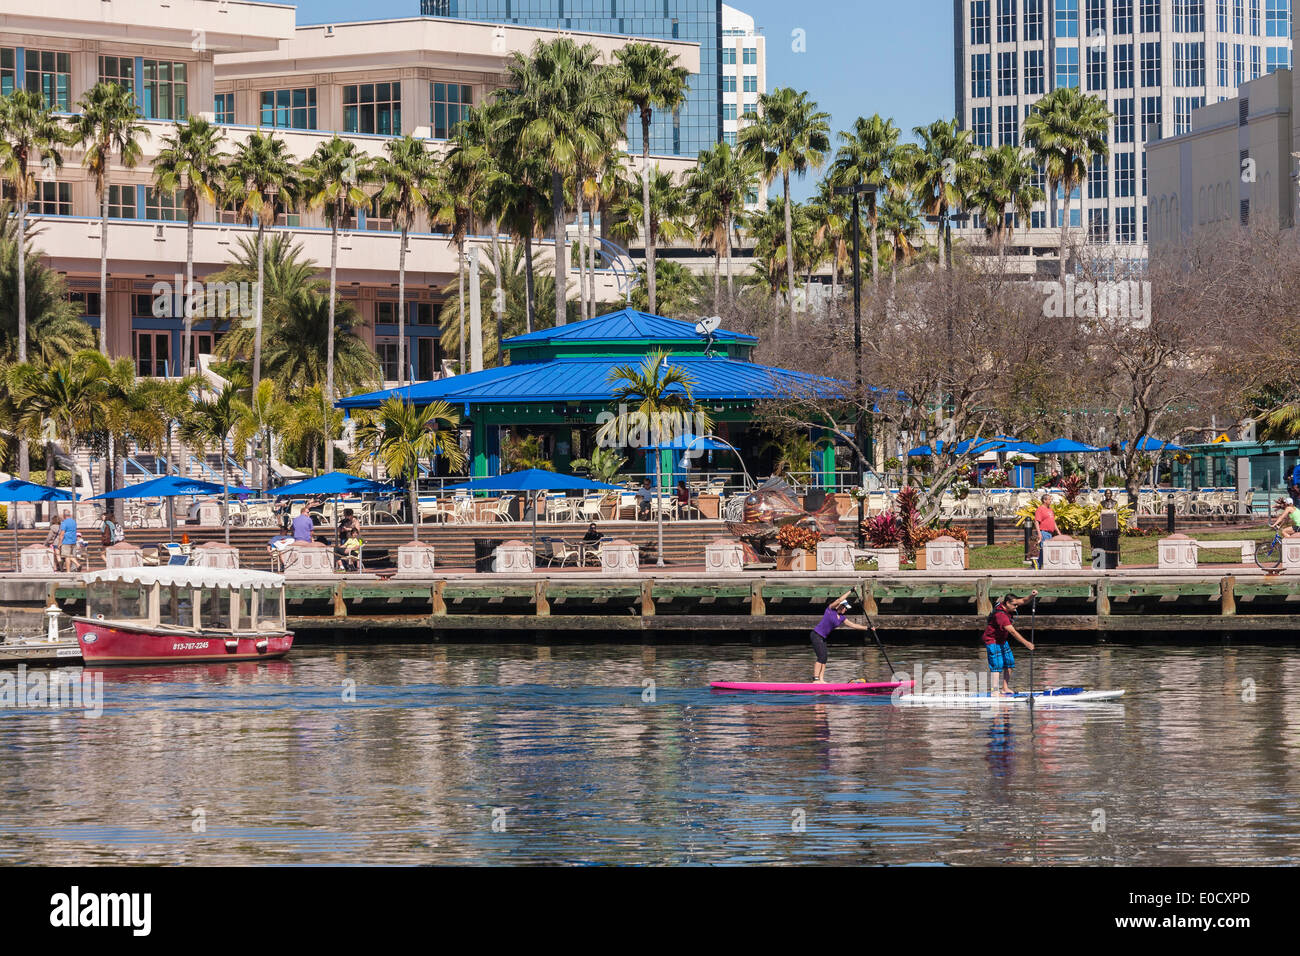 Cabana Bar and Water Taxi, Tampa Convention Center, Tampa, USA Stock Photo